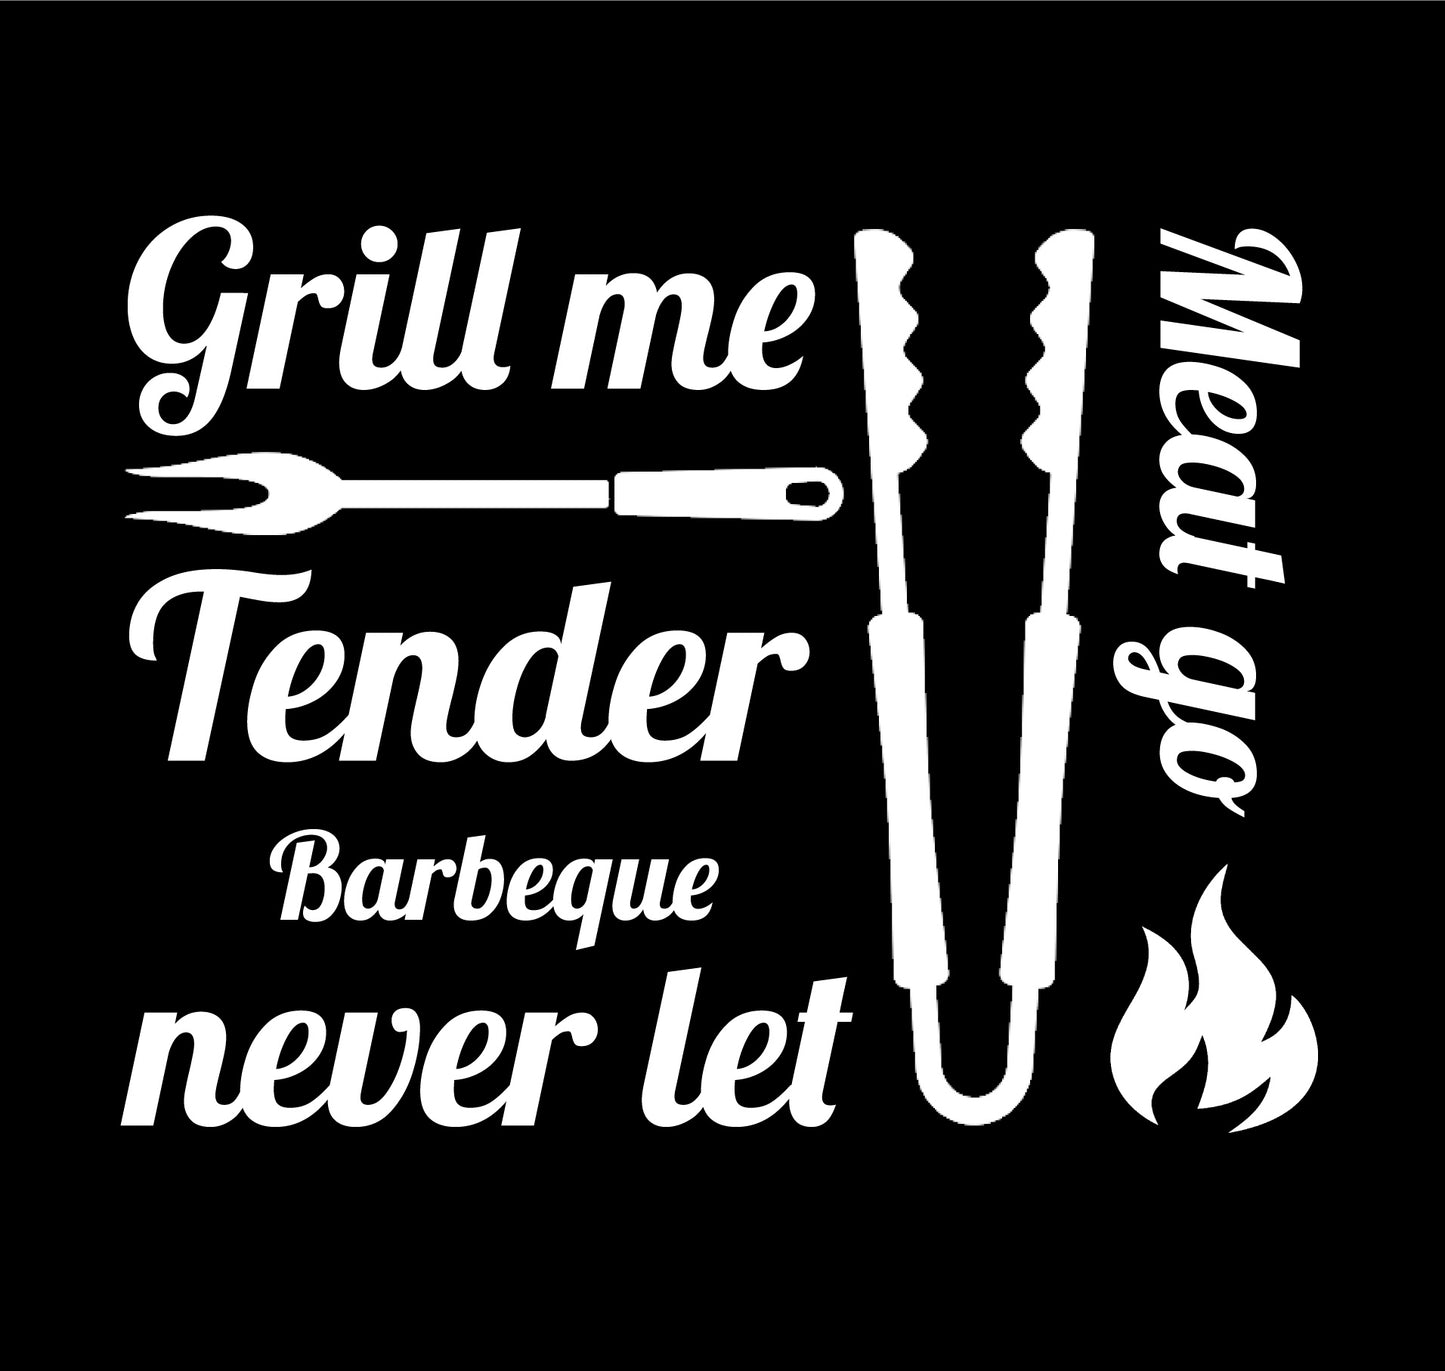 Grill me Tender Barbeque, Never let Meat Go /Elvis Cotton Apron